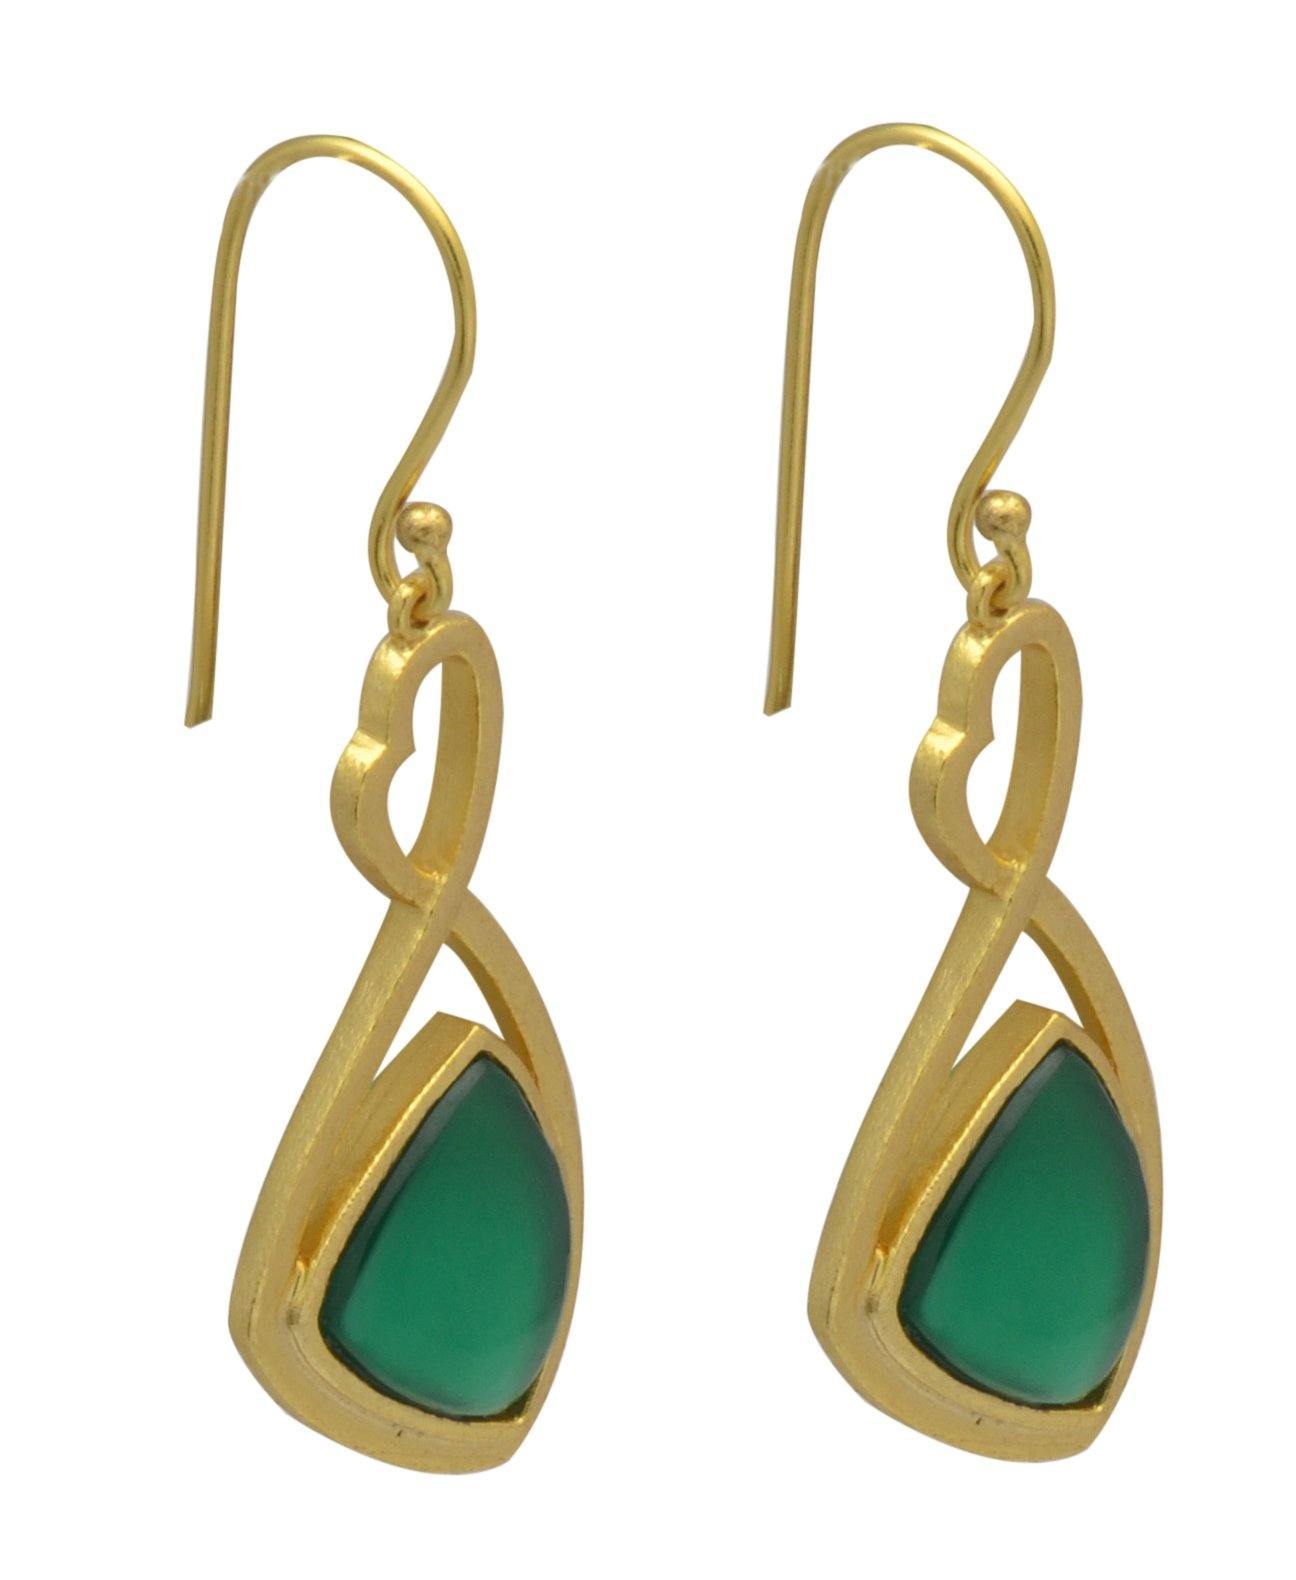 Green Onyx Gold Plated Over Brass Dangle Earrings Jewelry - YoTreasure